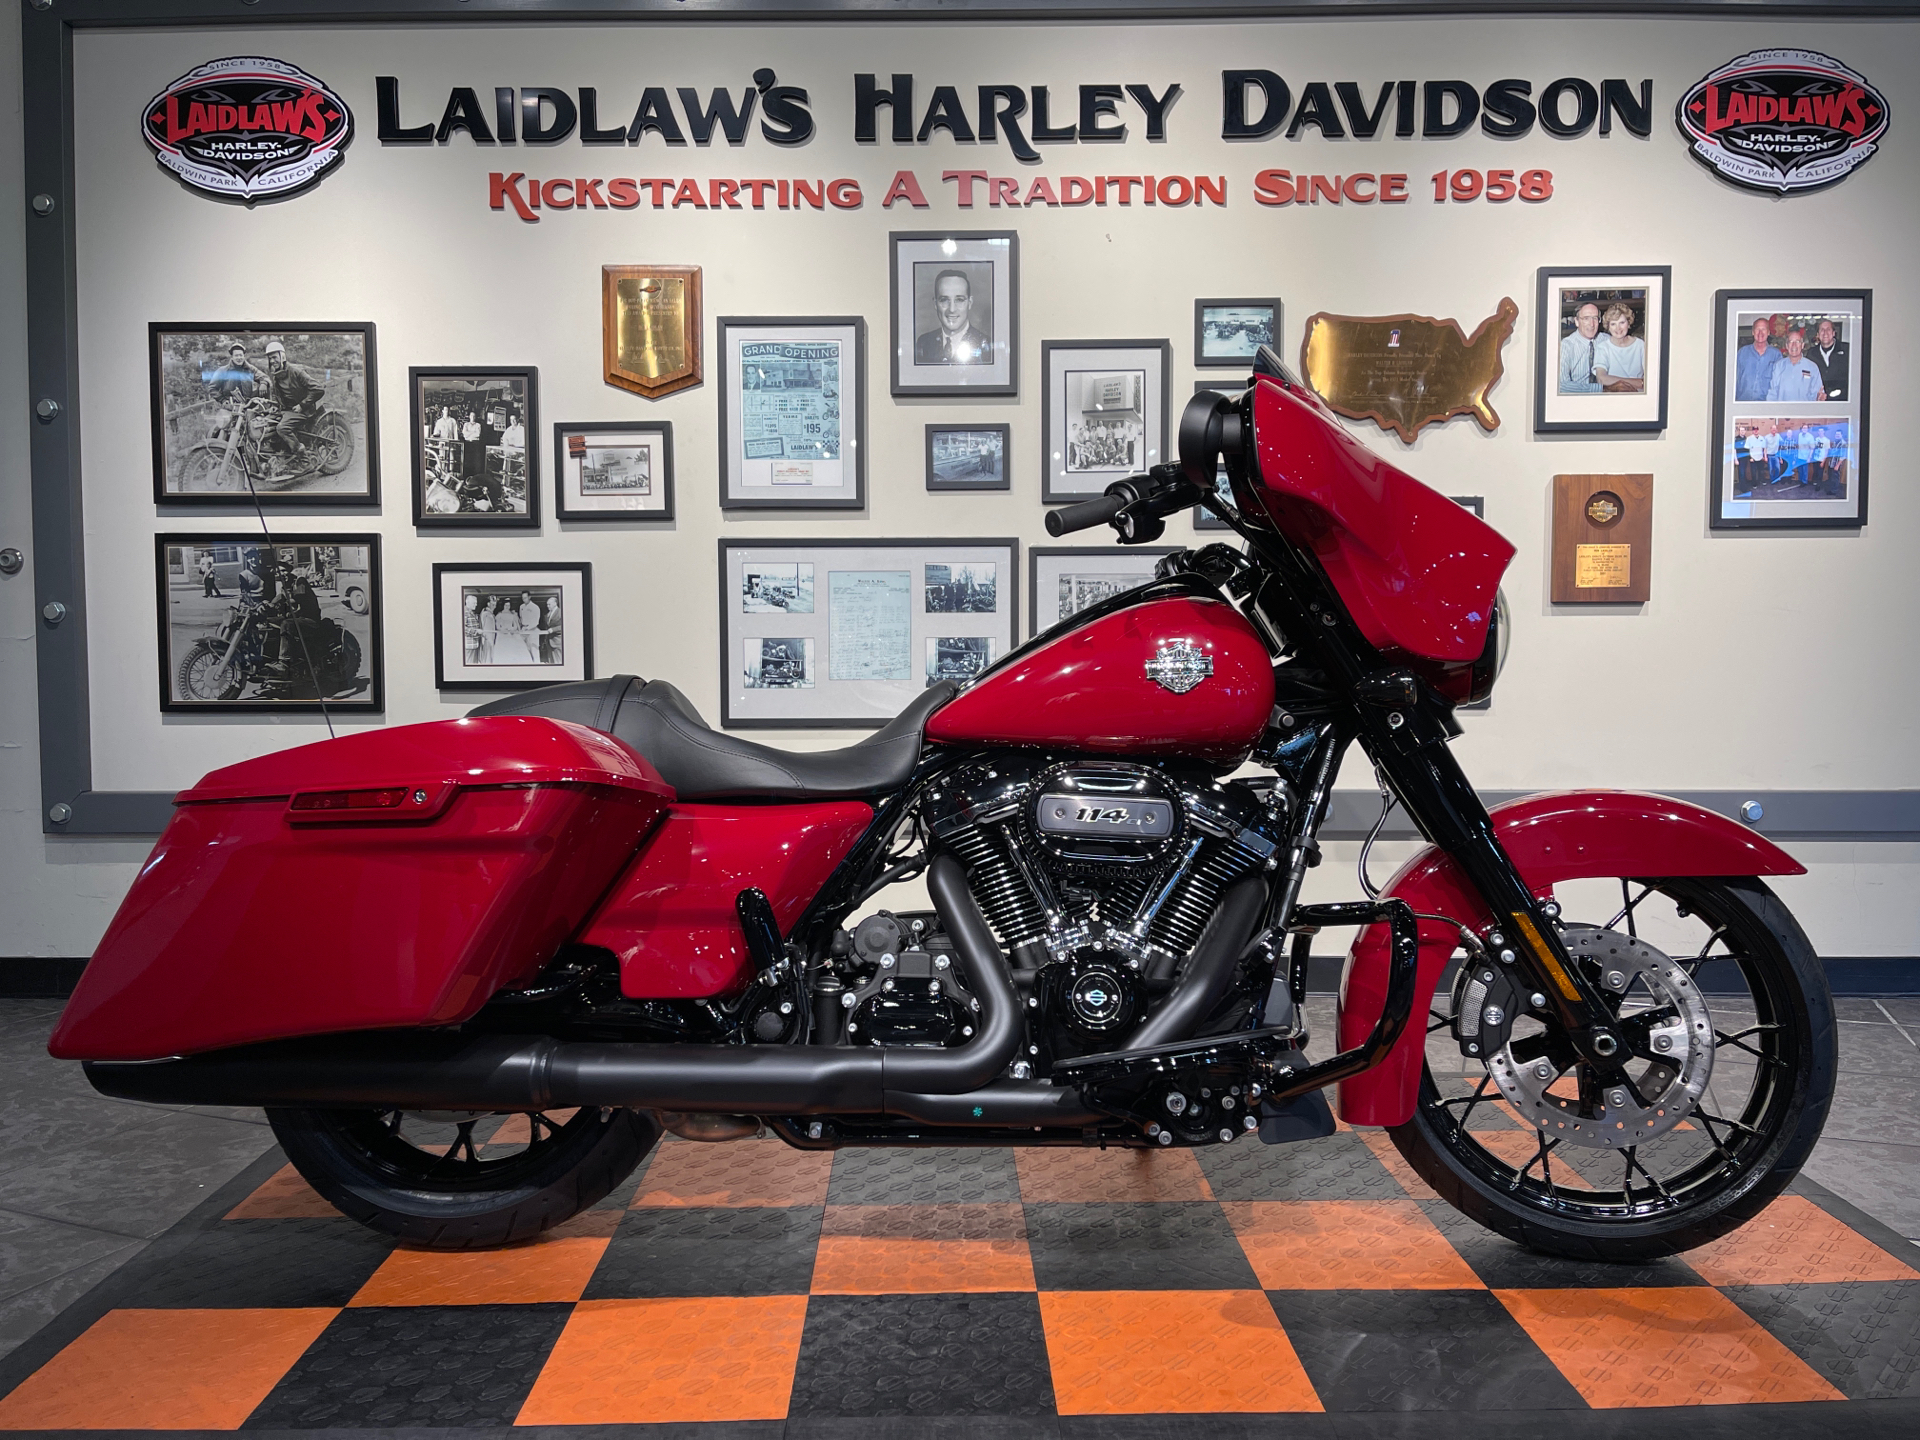 New 2021 Harley Davidson Street Glide Special Billiard Red Black Pearl Option Baldwin Park Ca 29174